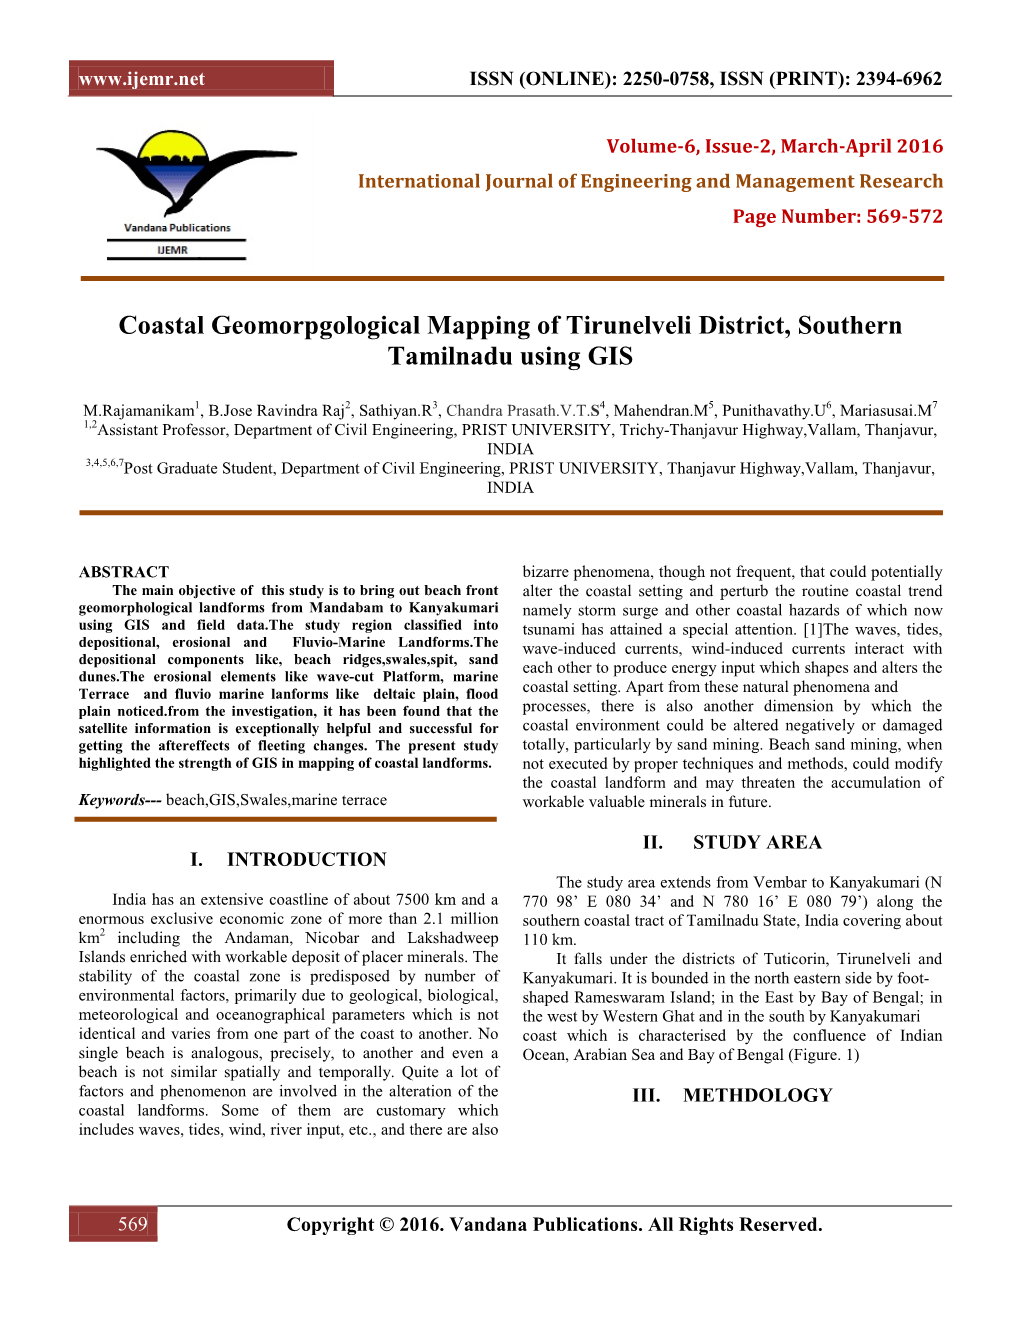 Coastal Geomorpgological Mapping of Tirunelveli District, Southern Tamilnadu Using GIS